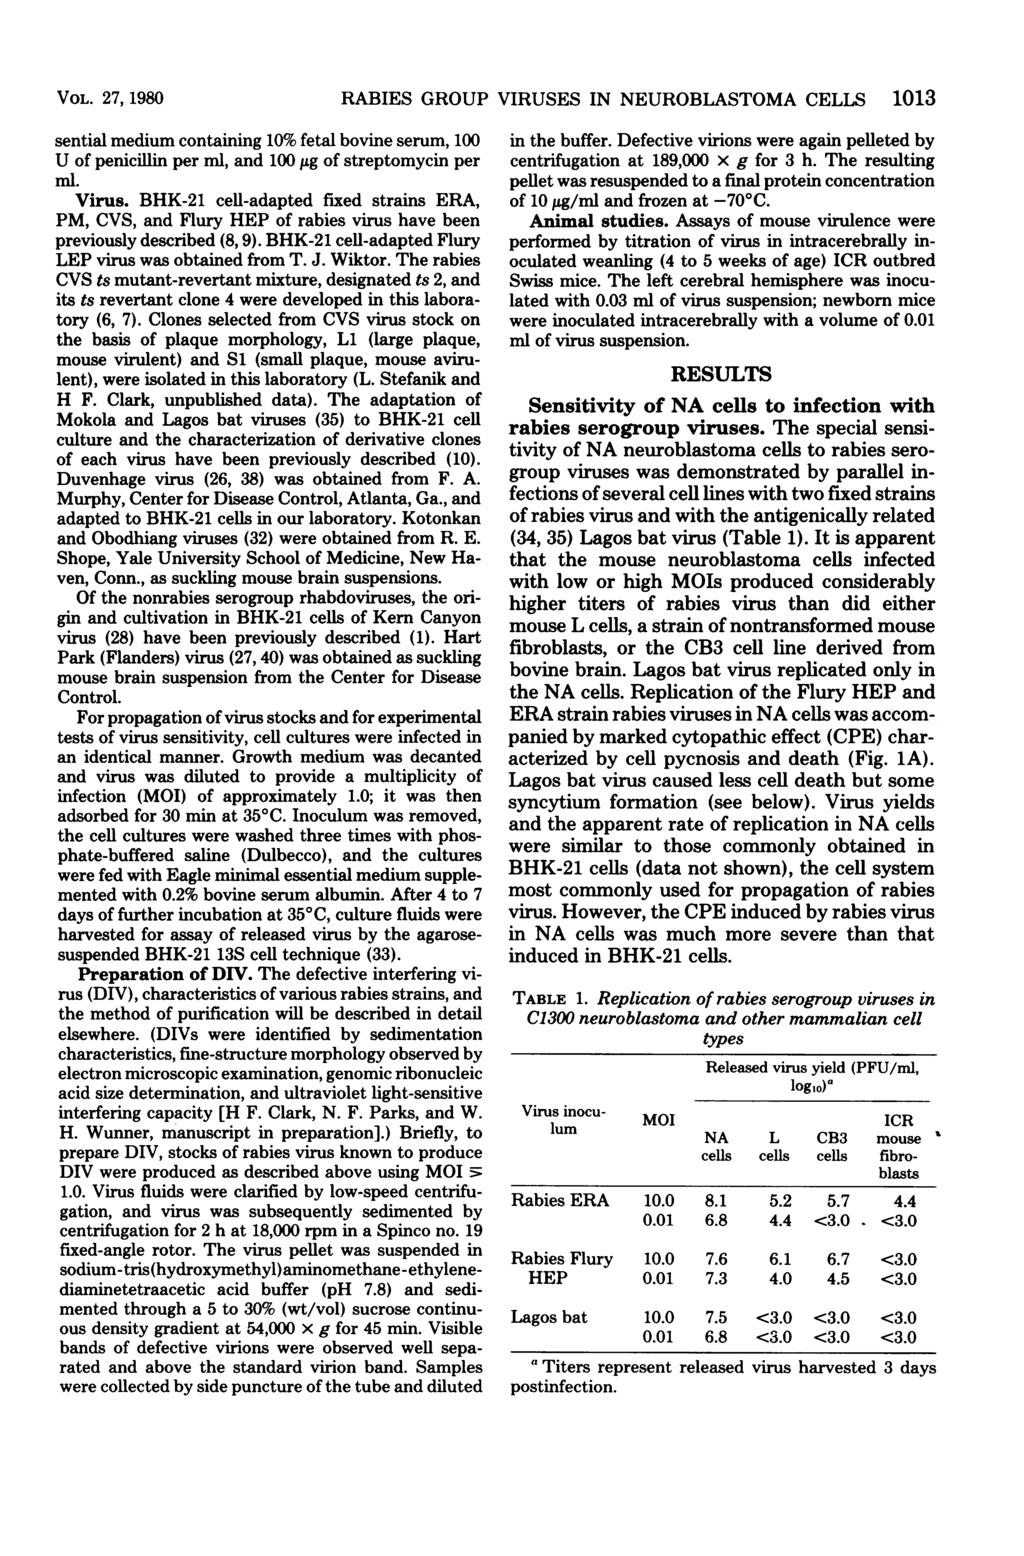 VOL. 7, 1980 sential medium containing 10% fetal bovine serum, 100 U of penicillin per ml, and 100,ug of streptomycin per ml. Virus.